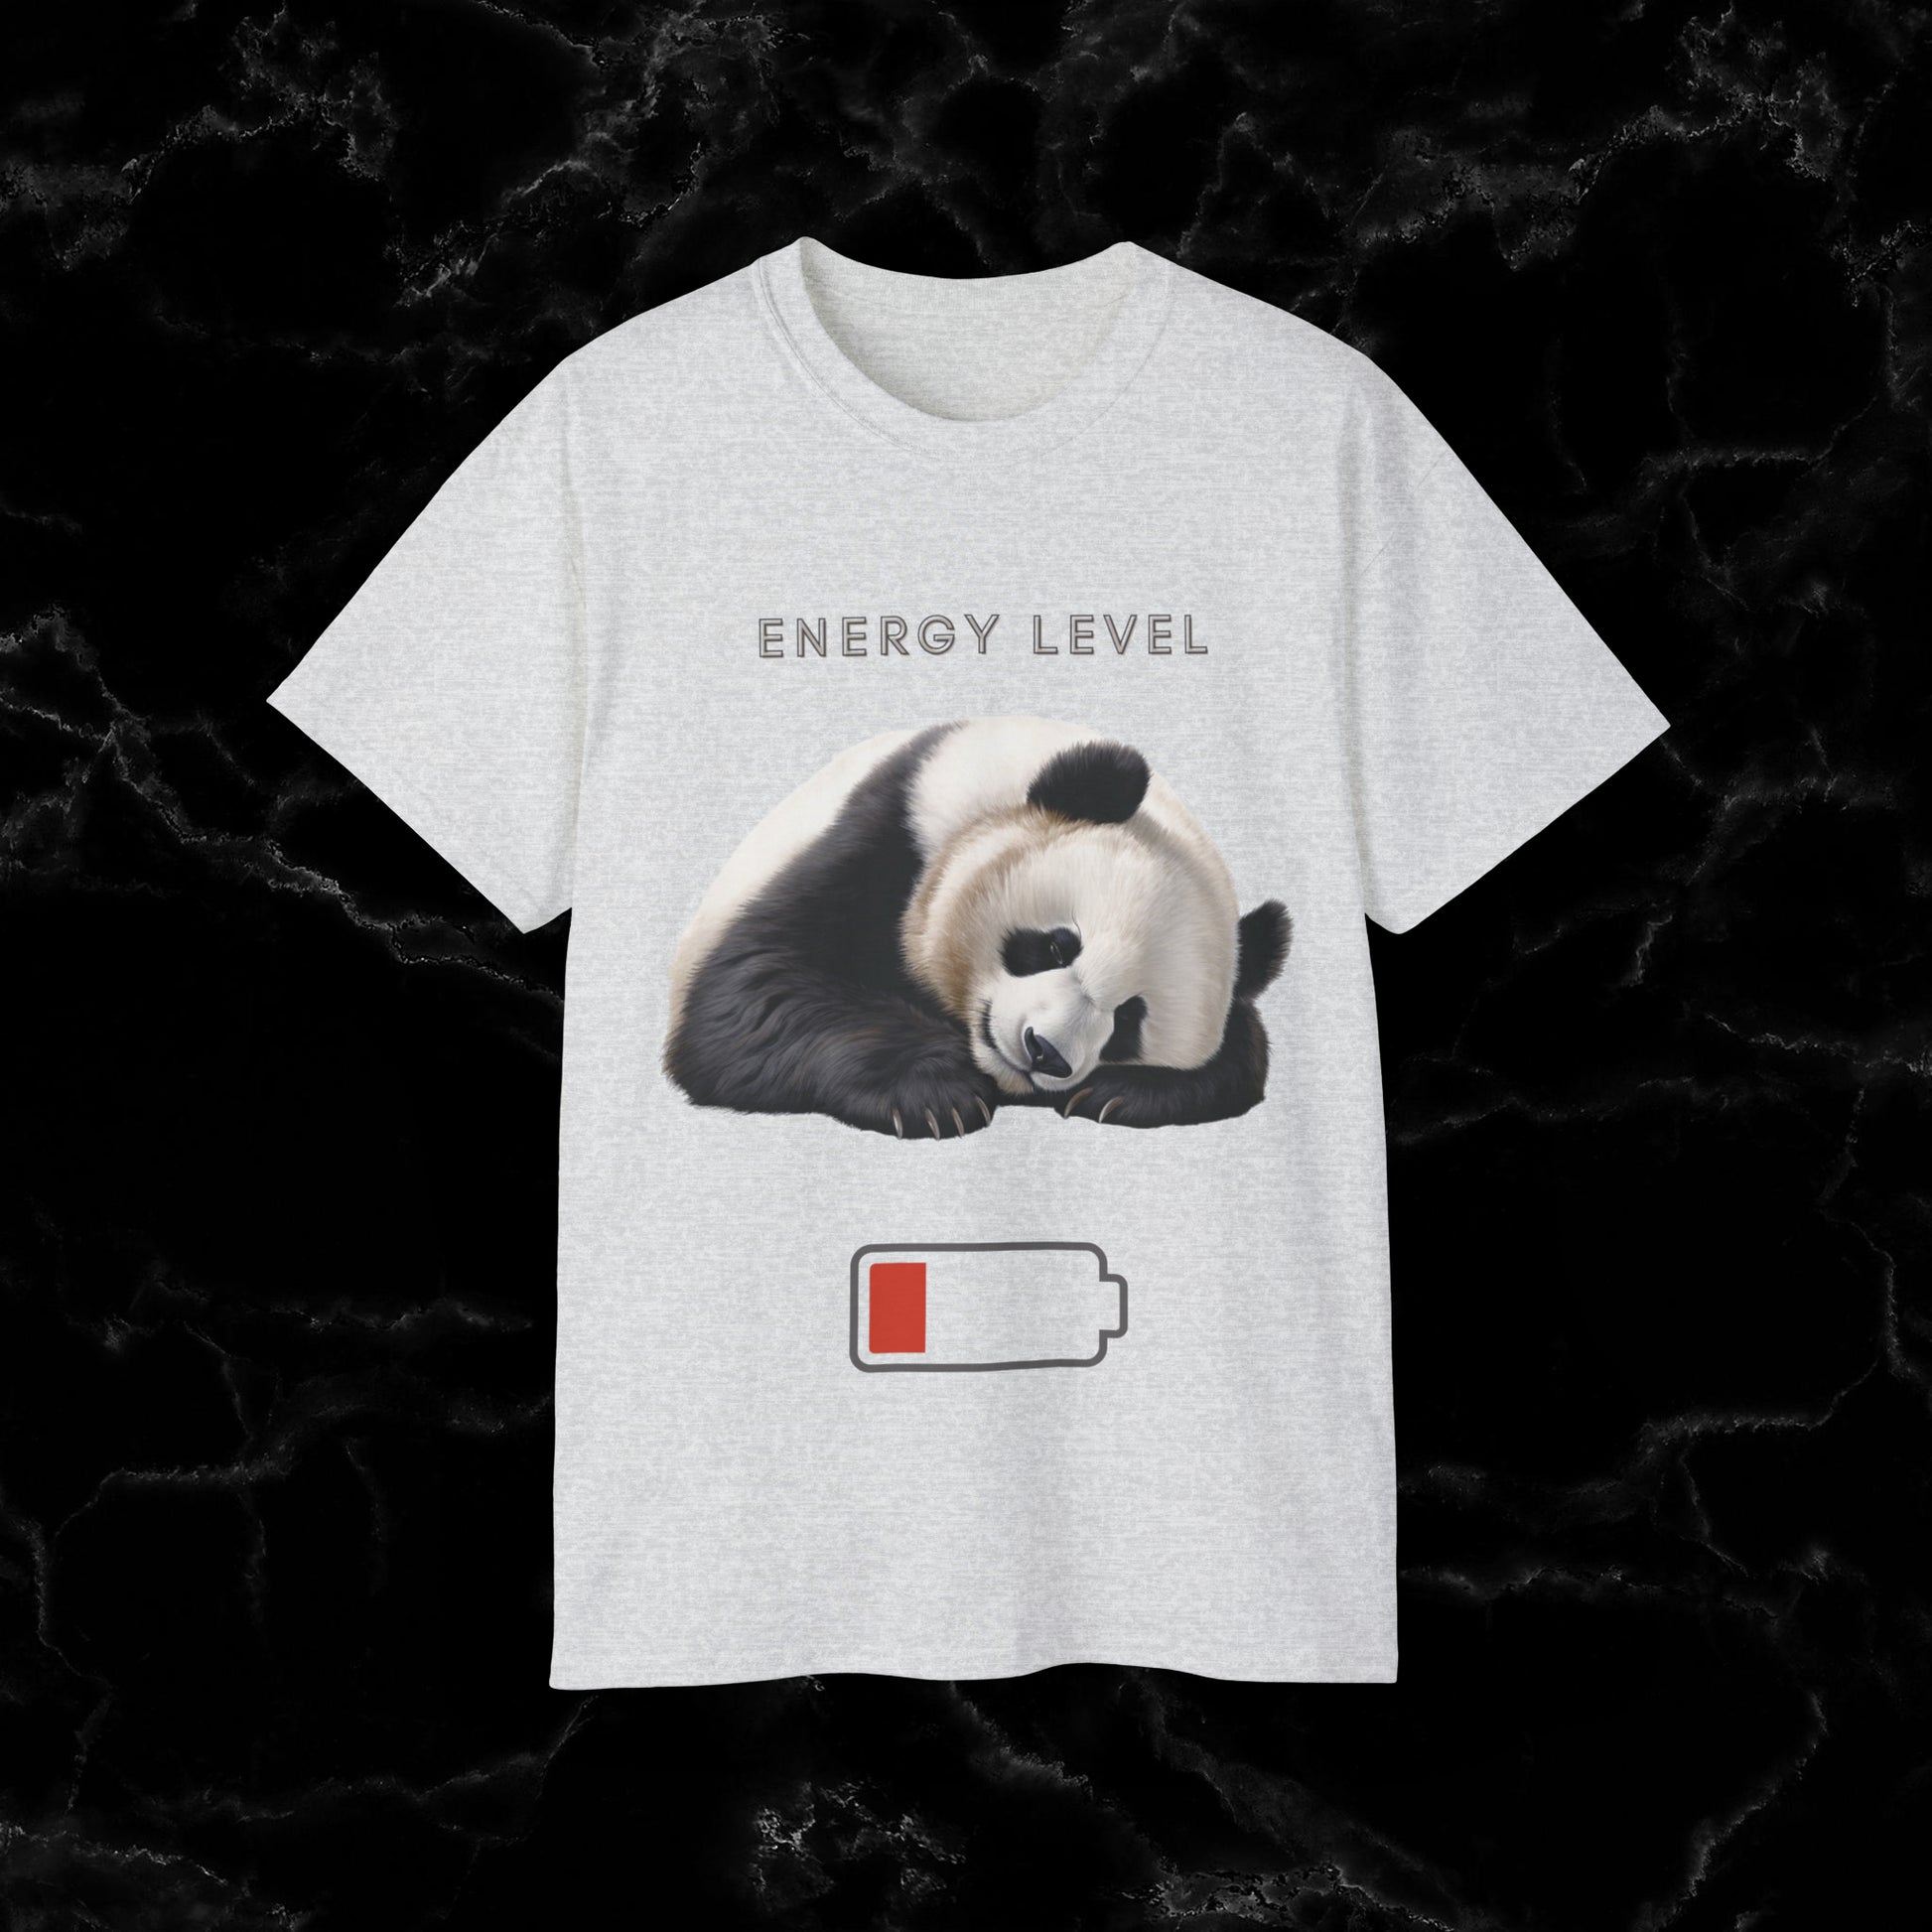 Nap Time Panda Unisex Funny Tee - Hilarious Panda Nap Design - Energy Level T-Shirt Ash S 